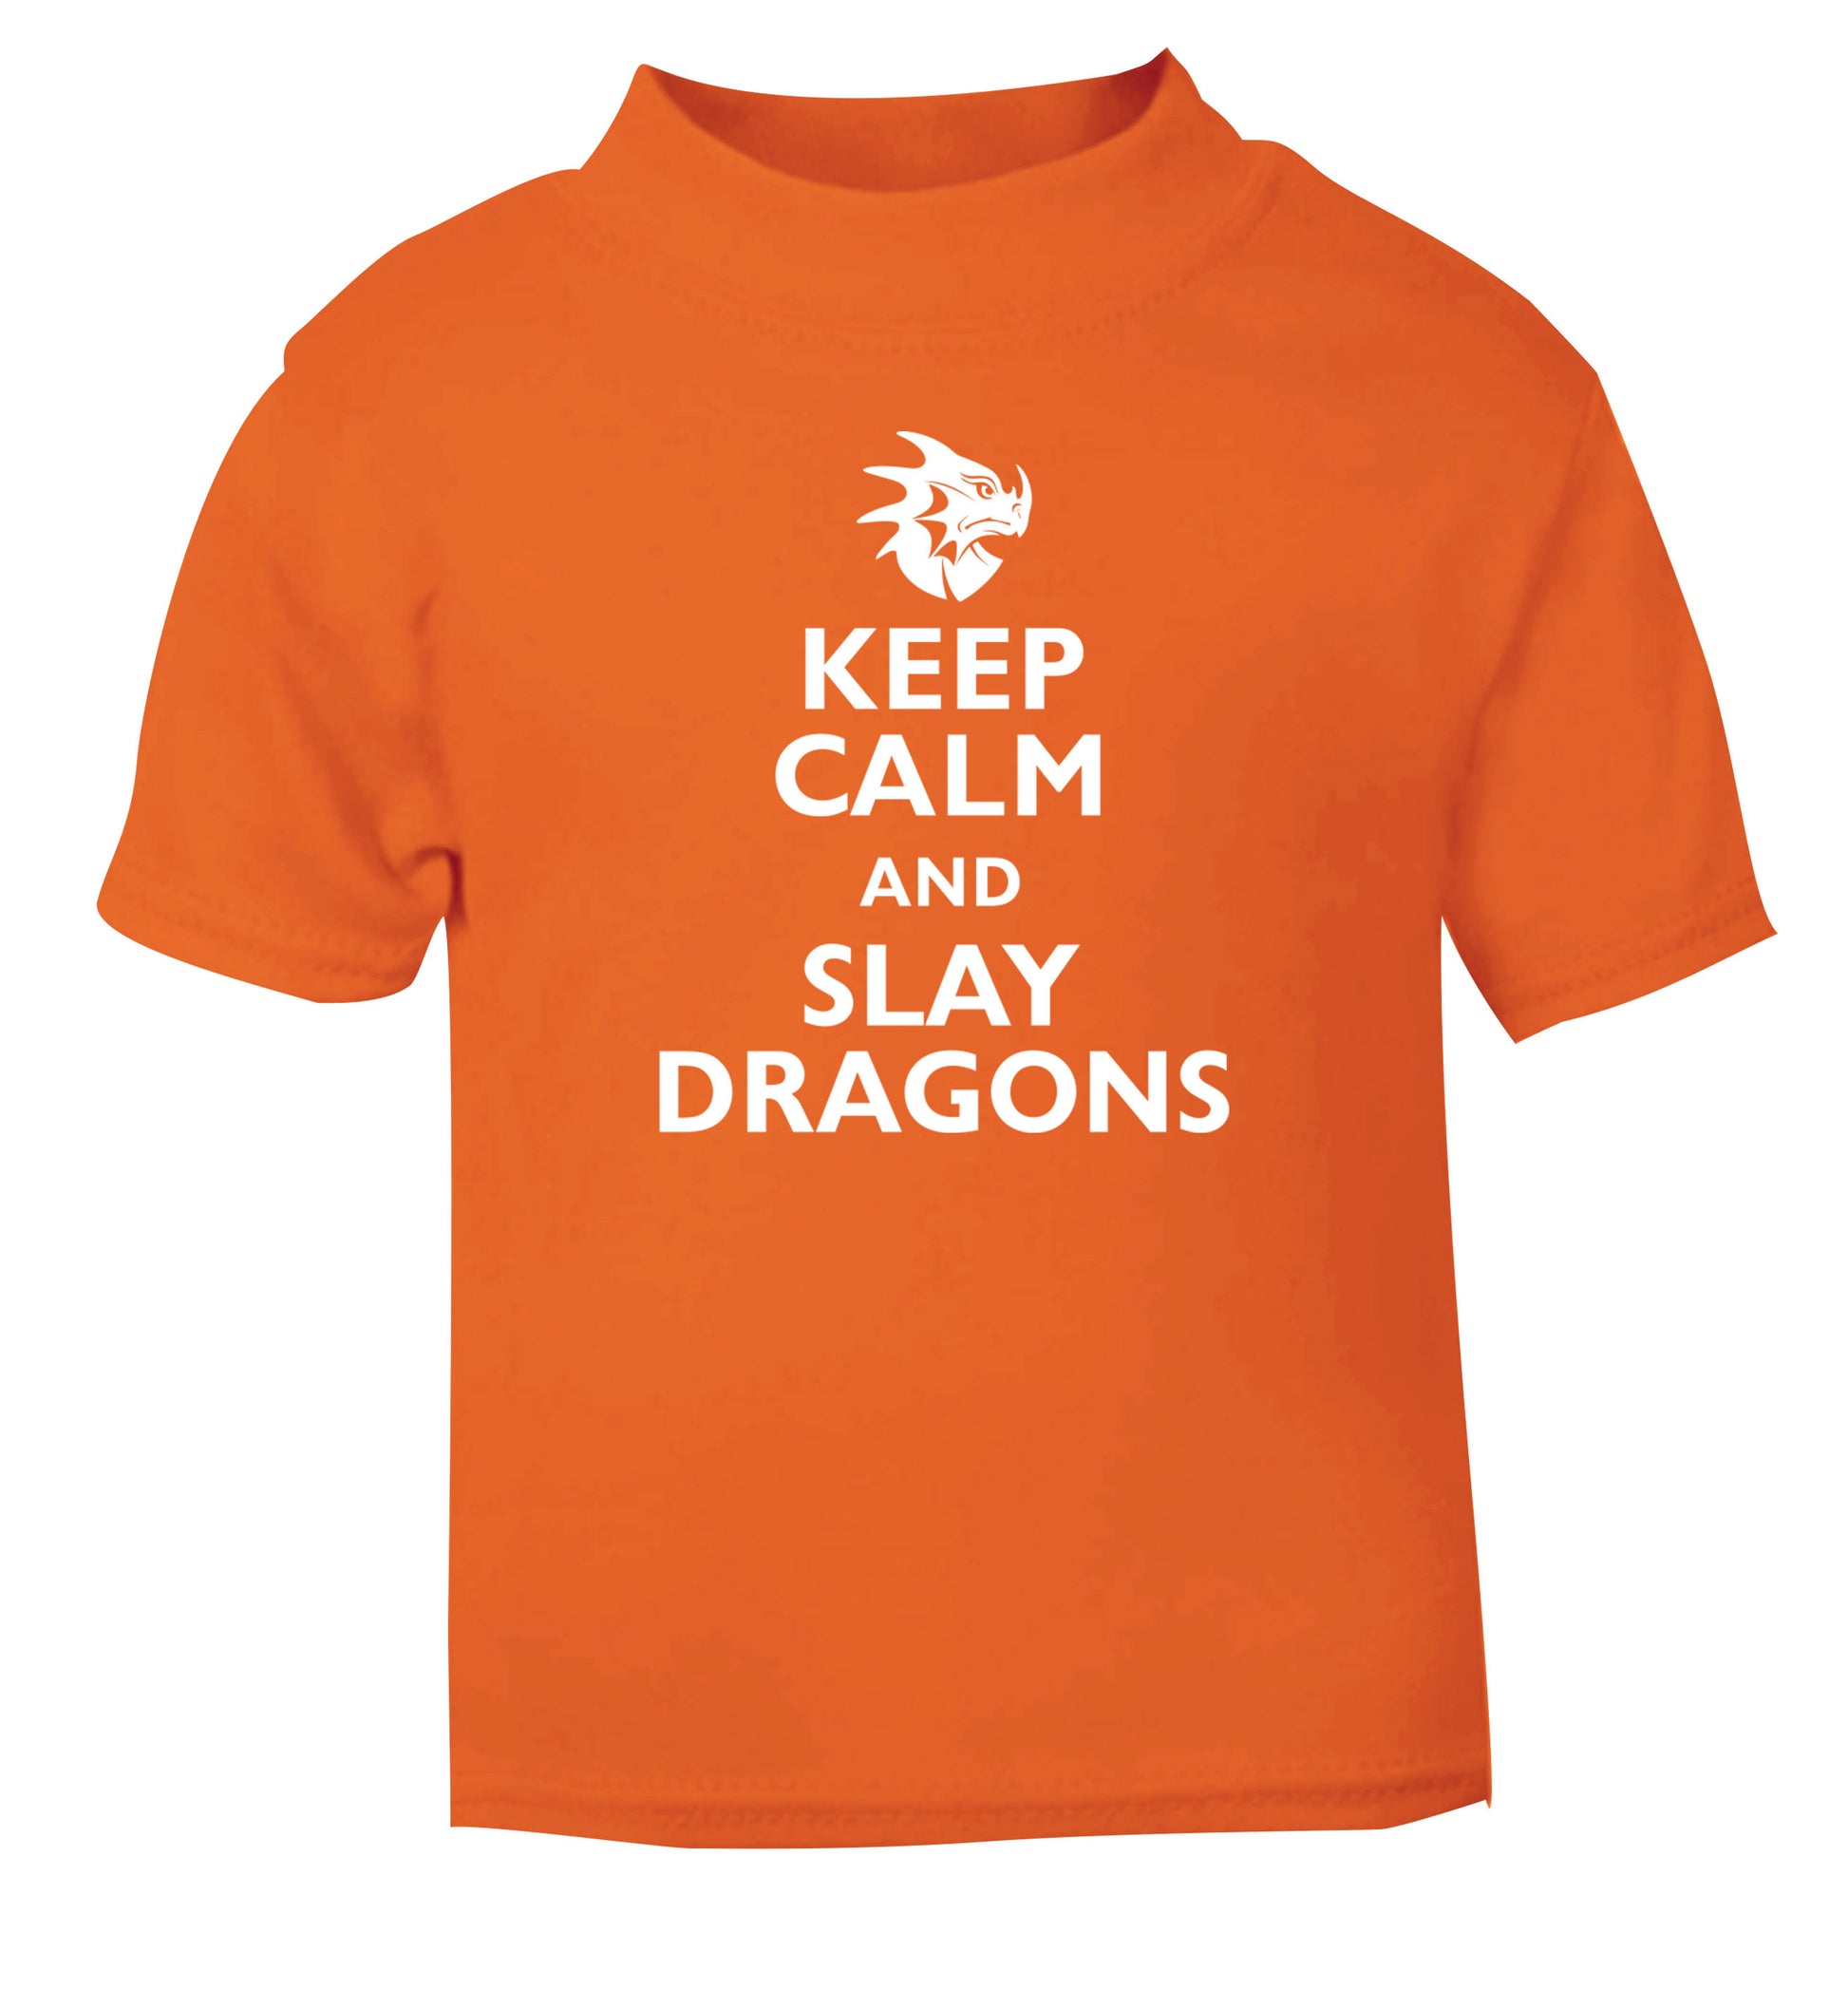 Keep calm and slay dragons orange Baby Toddler Tshirt 2 Years